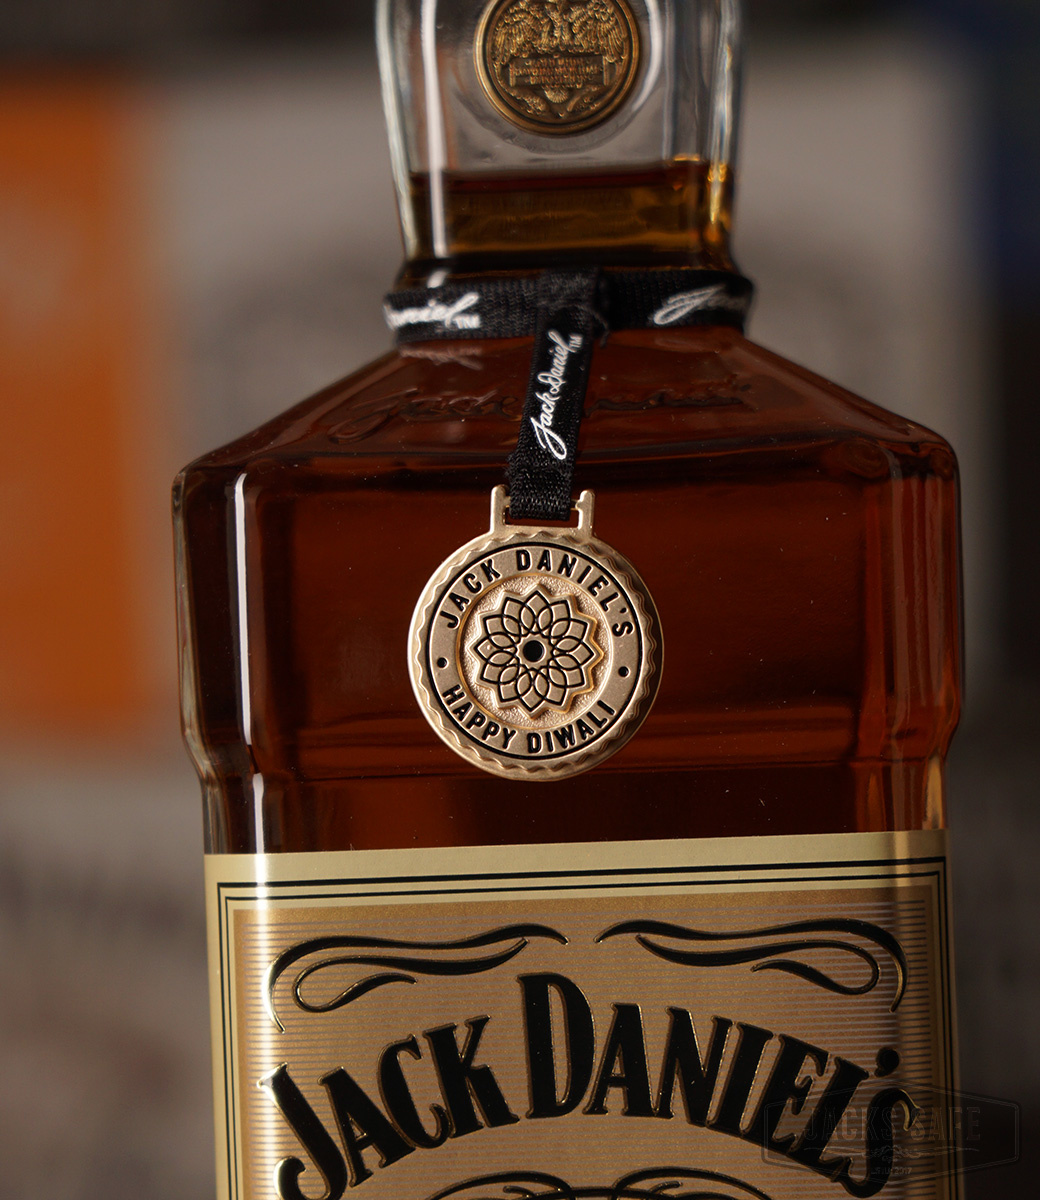 Jack Daniel's No. 27 Gold Diwali Edition